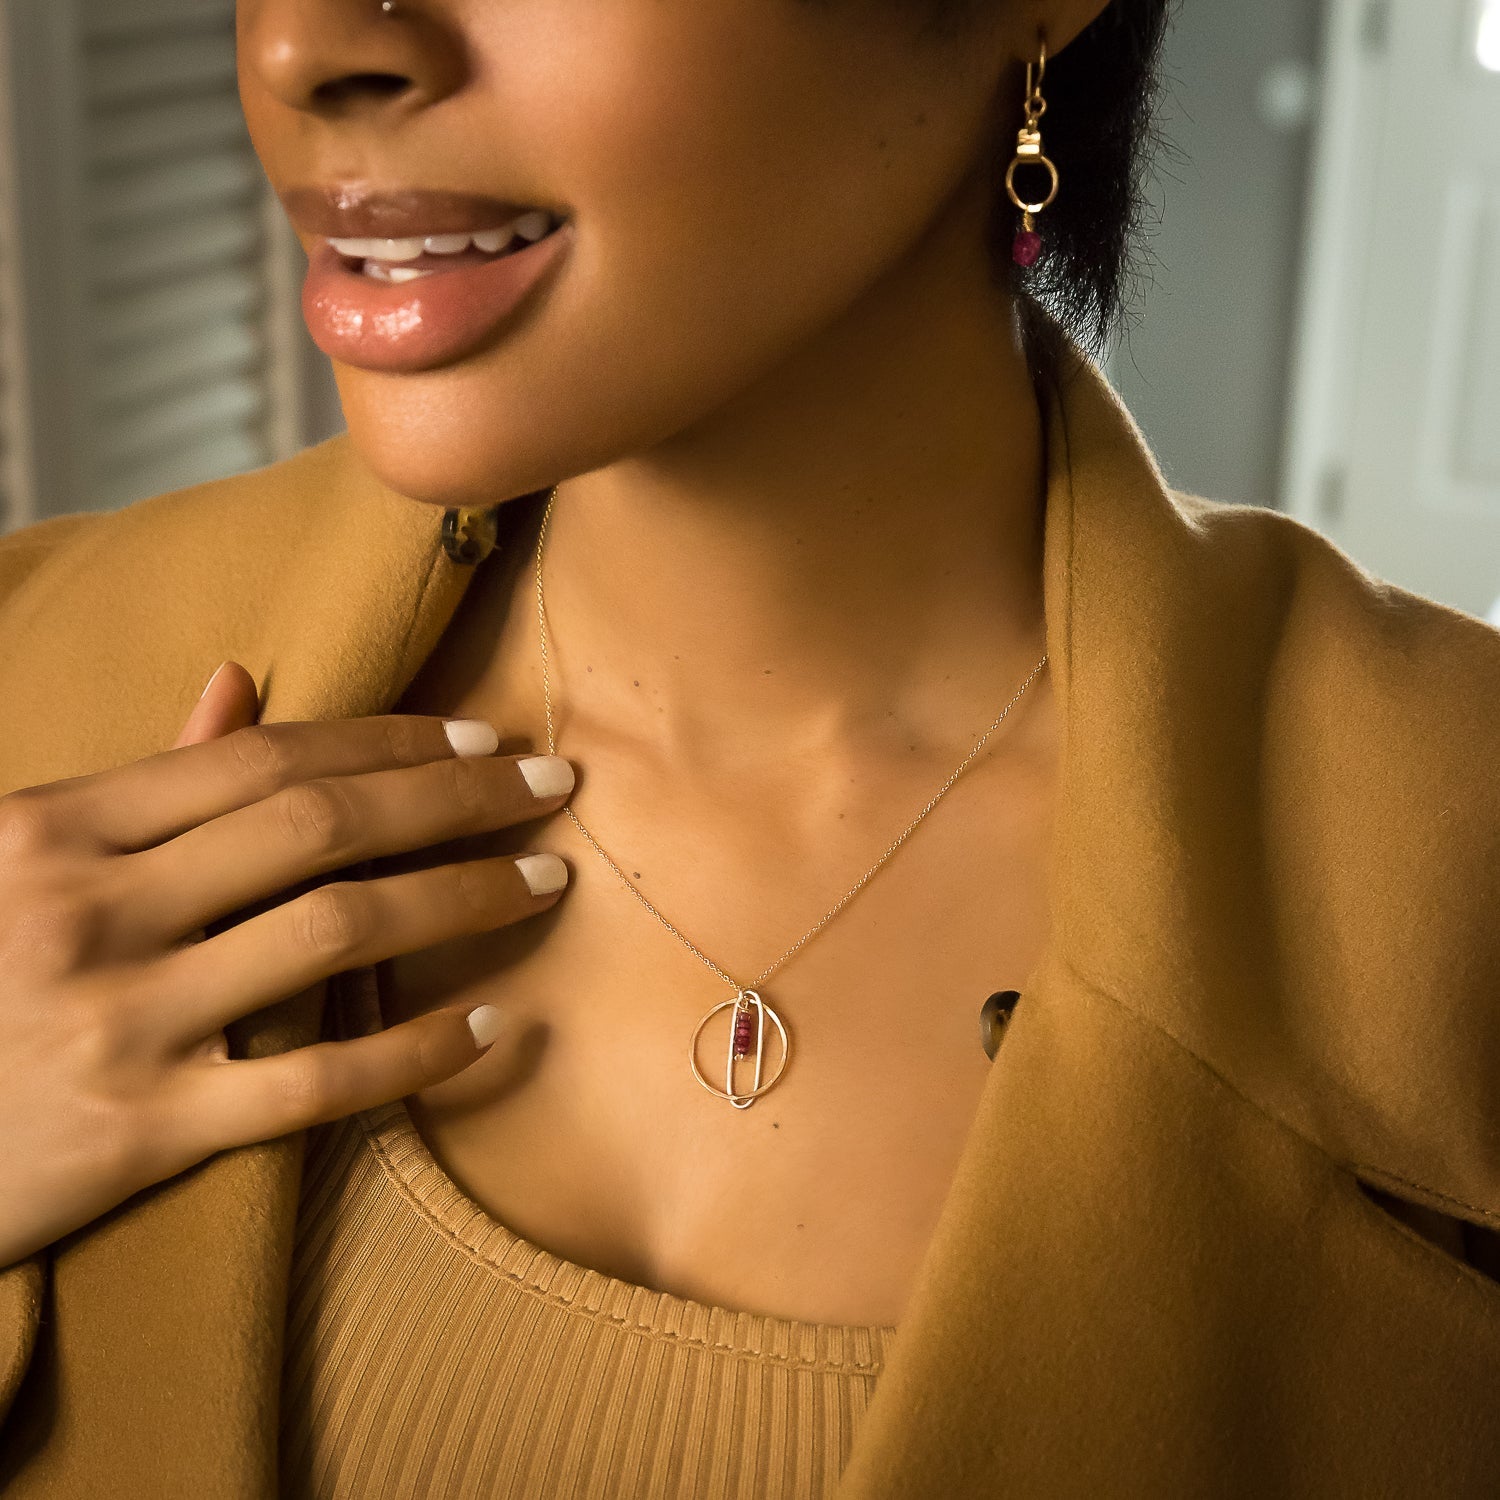 handmade gold filled ruby gemstone necklace laura j designs